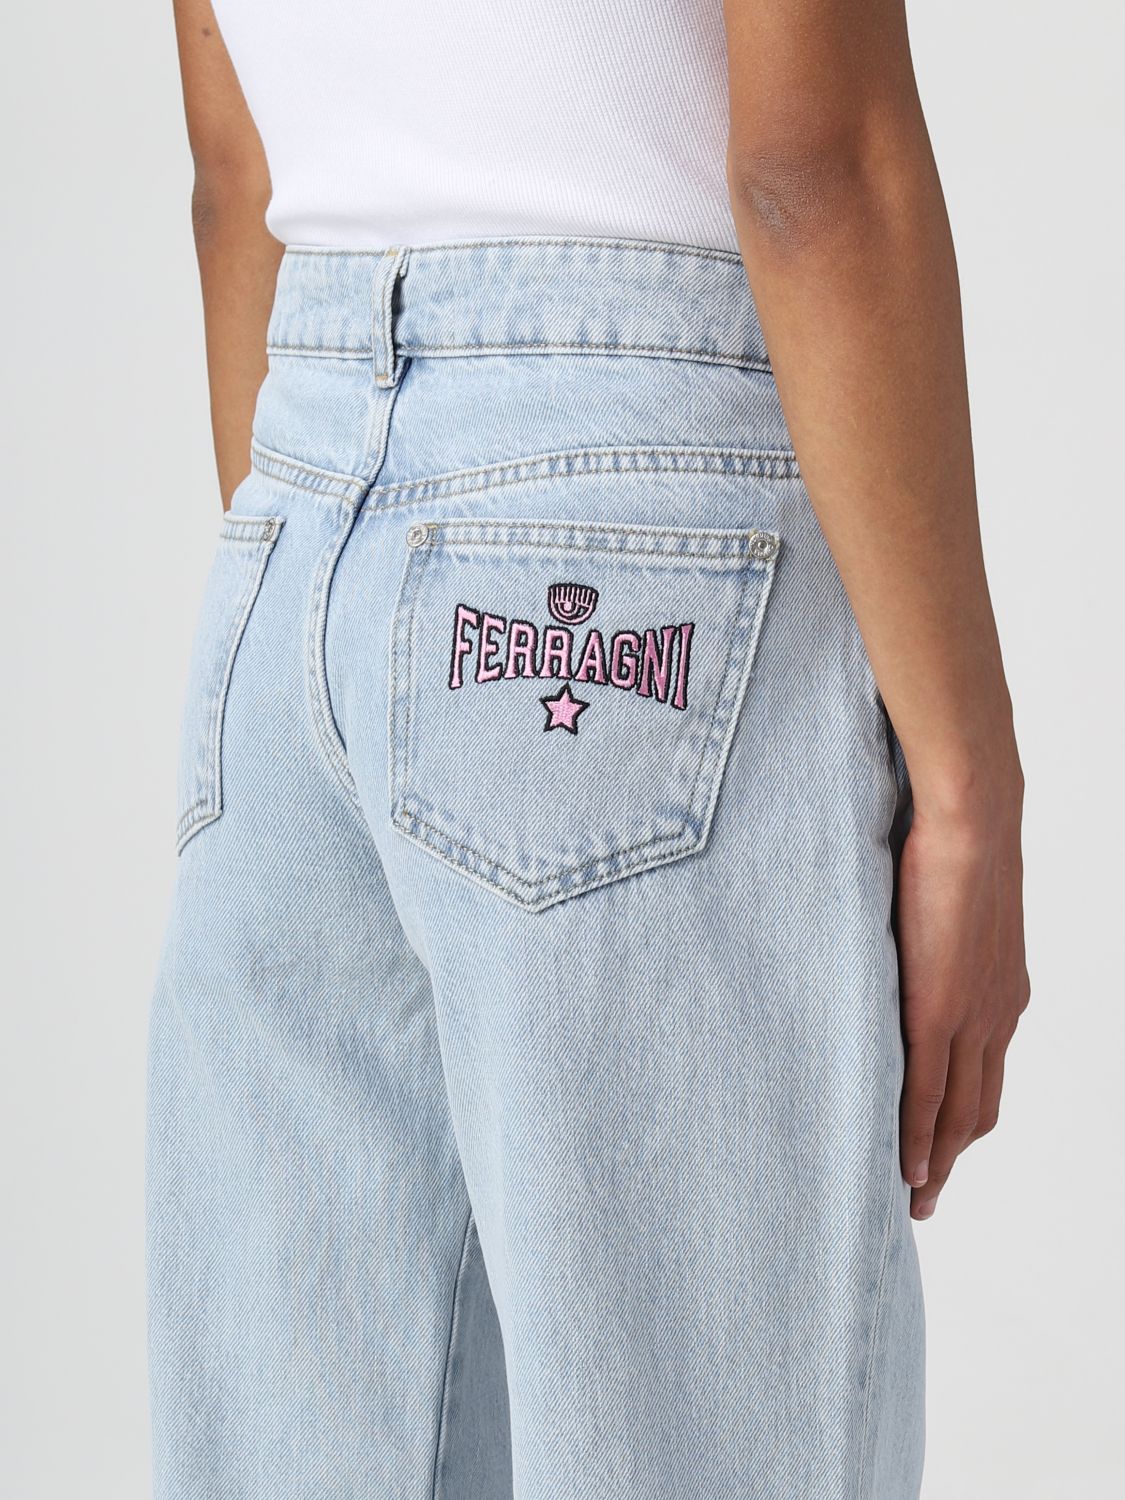 Vintage Cargo Jeans Jumpsuit Women Streetwear Hip Hop Loose Long Sleeve  Shirt One Piece Denim Pants Set Overalls Rompers 9112